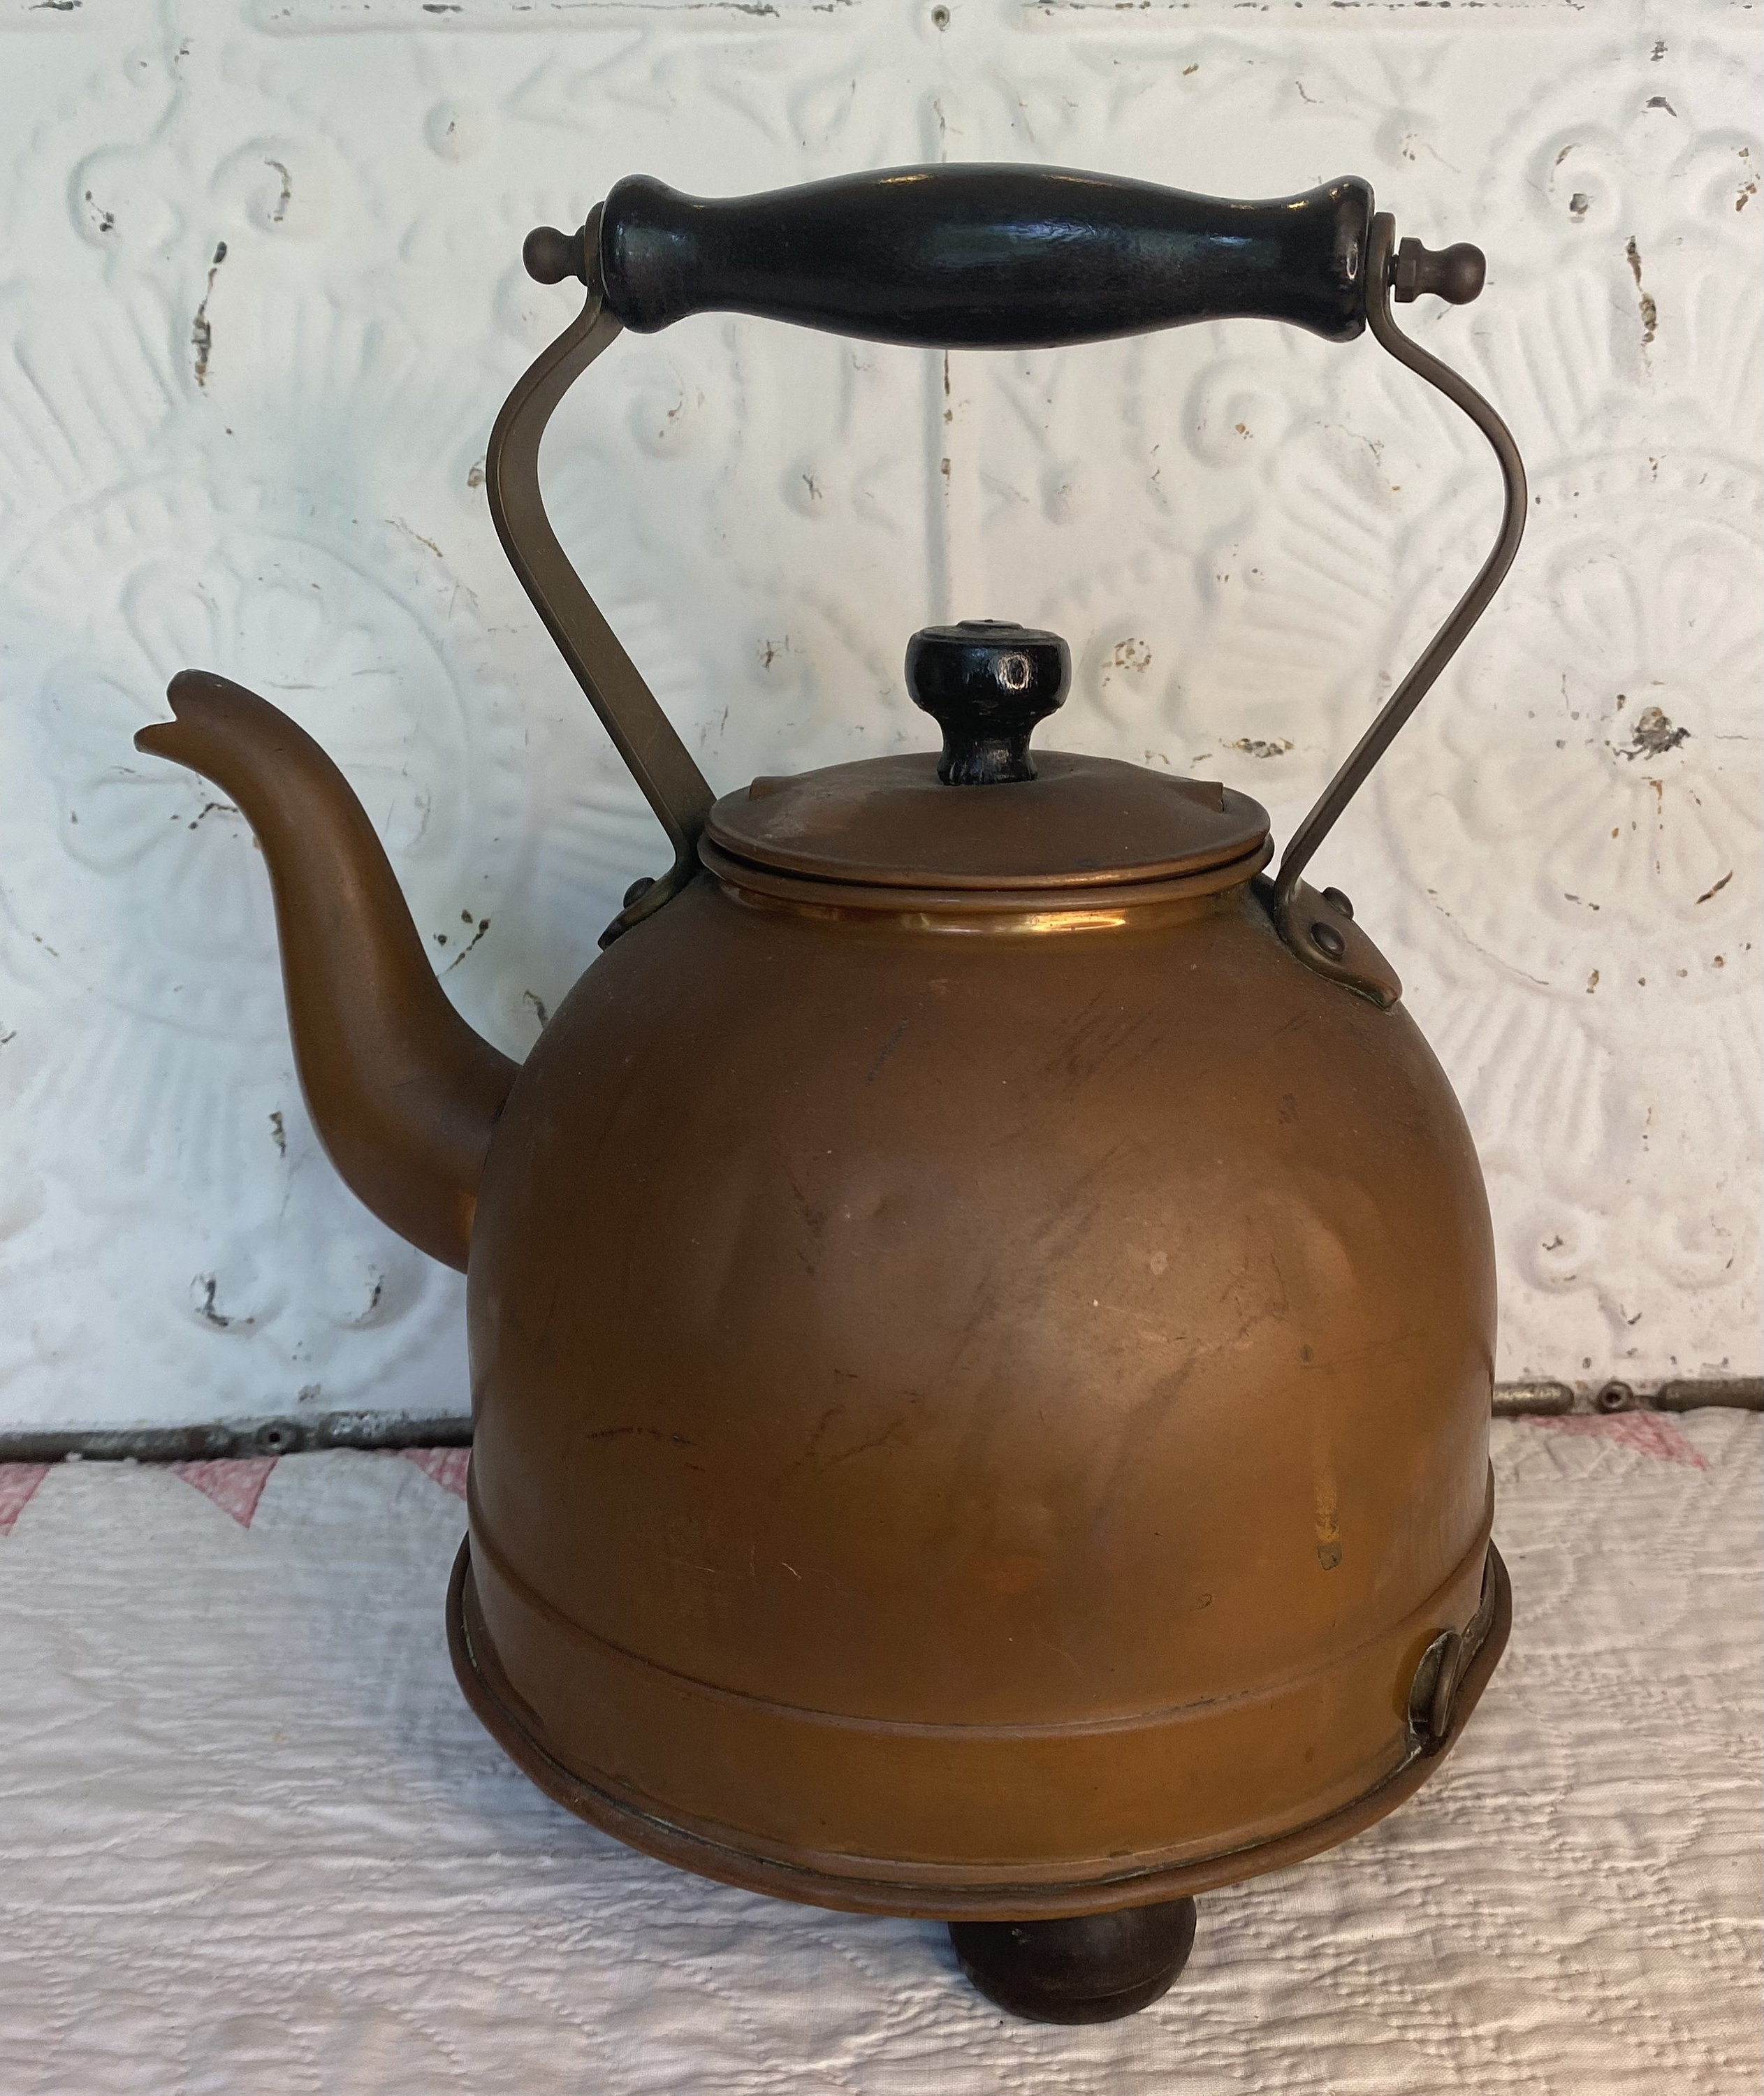 Copper Electric Kettle Early Vintage Tea Water Kettle by Premier